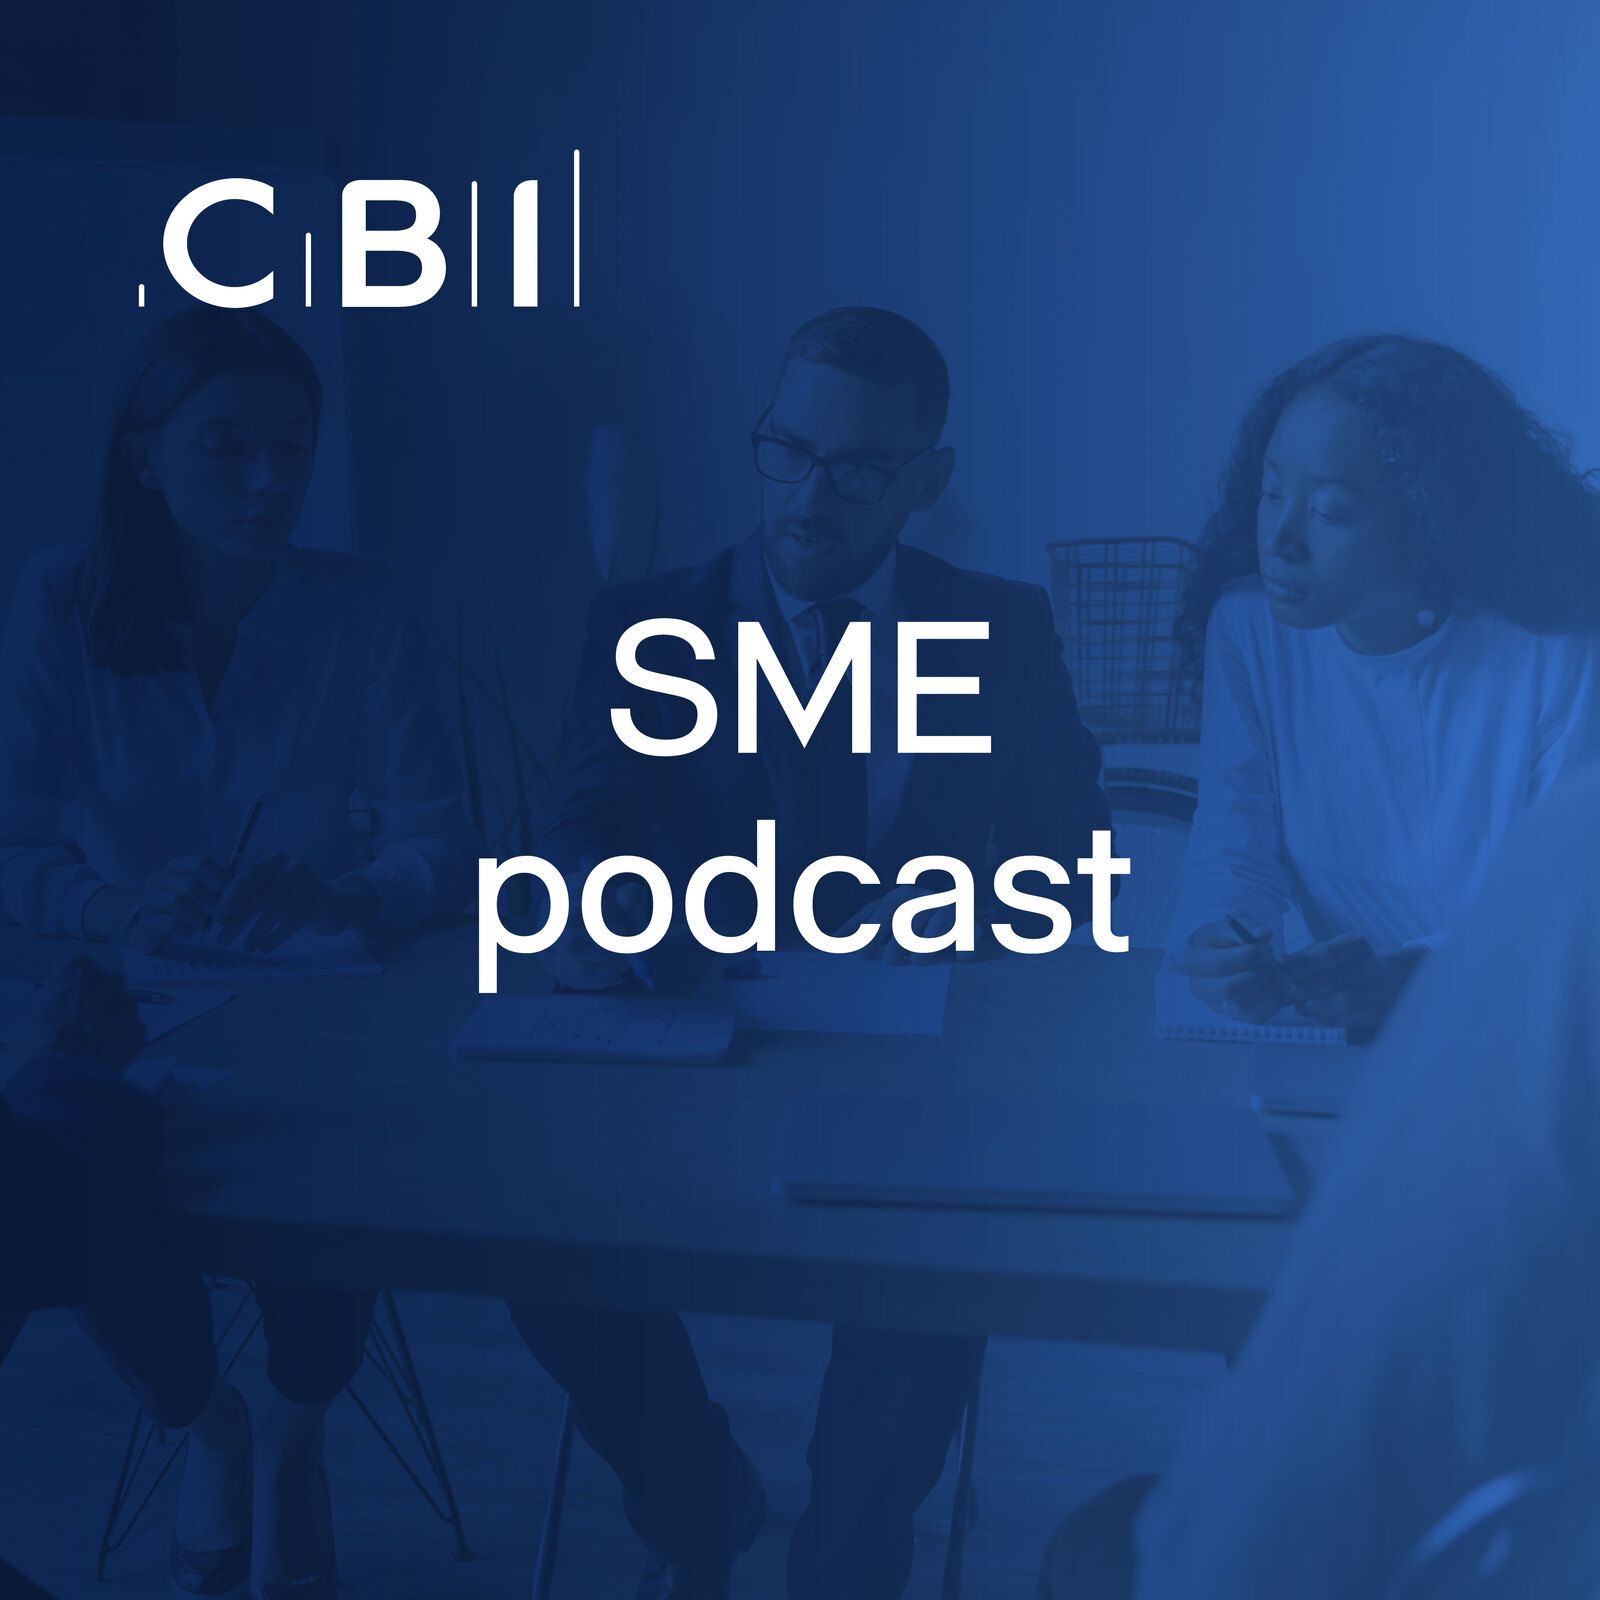 SME Podcast: Myth-busting digital transformation